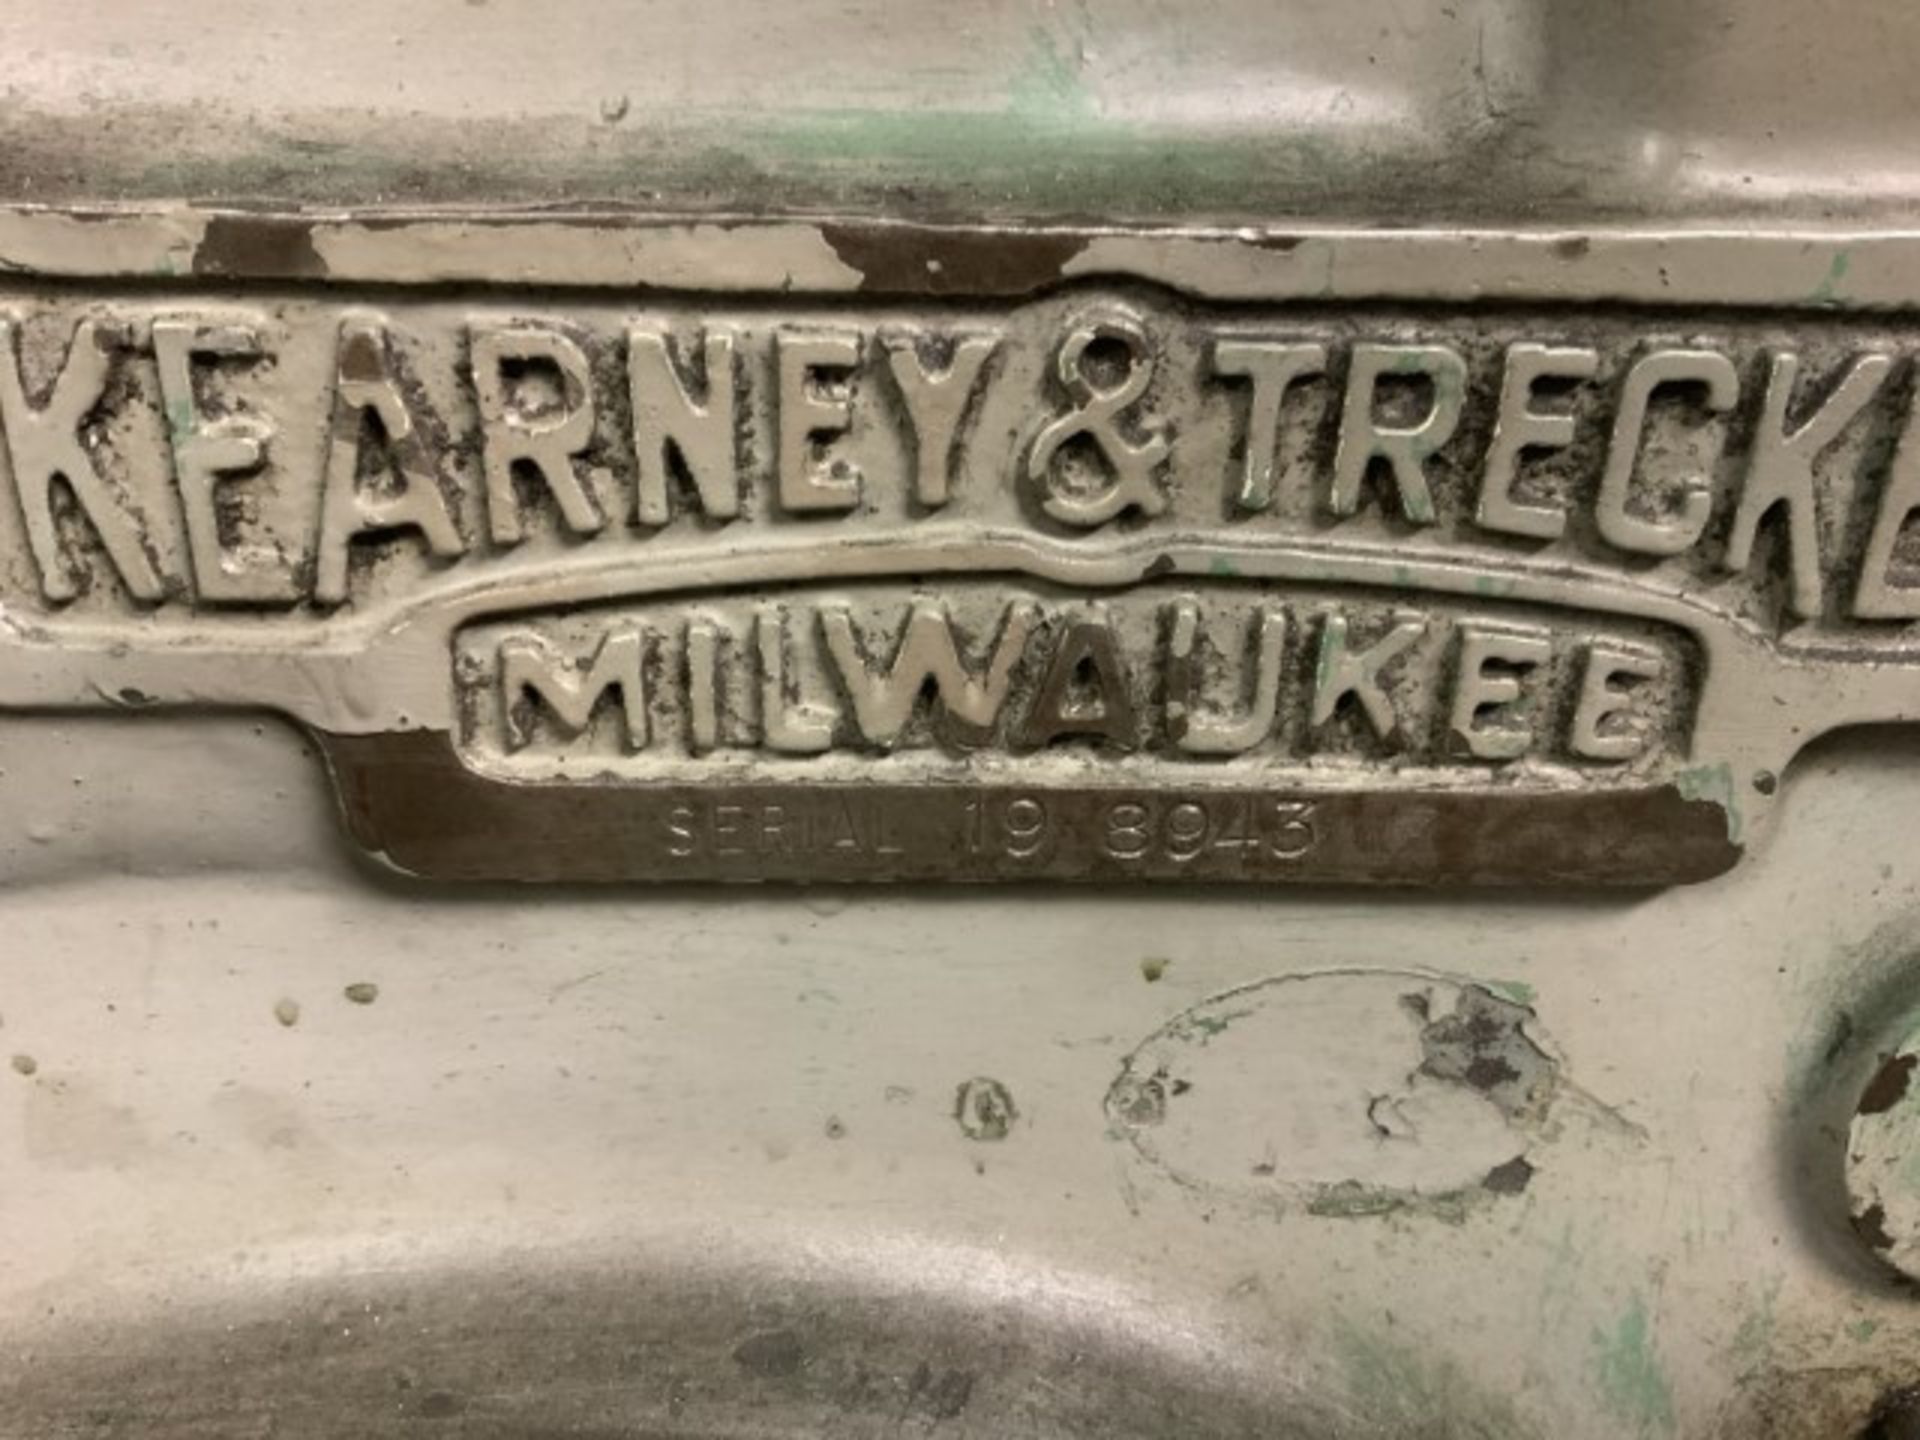 Milwaukee, Kearney & Trecker Horizontal Mill - Image 3 of 5